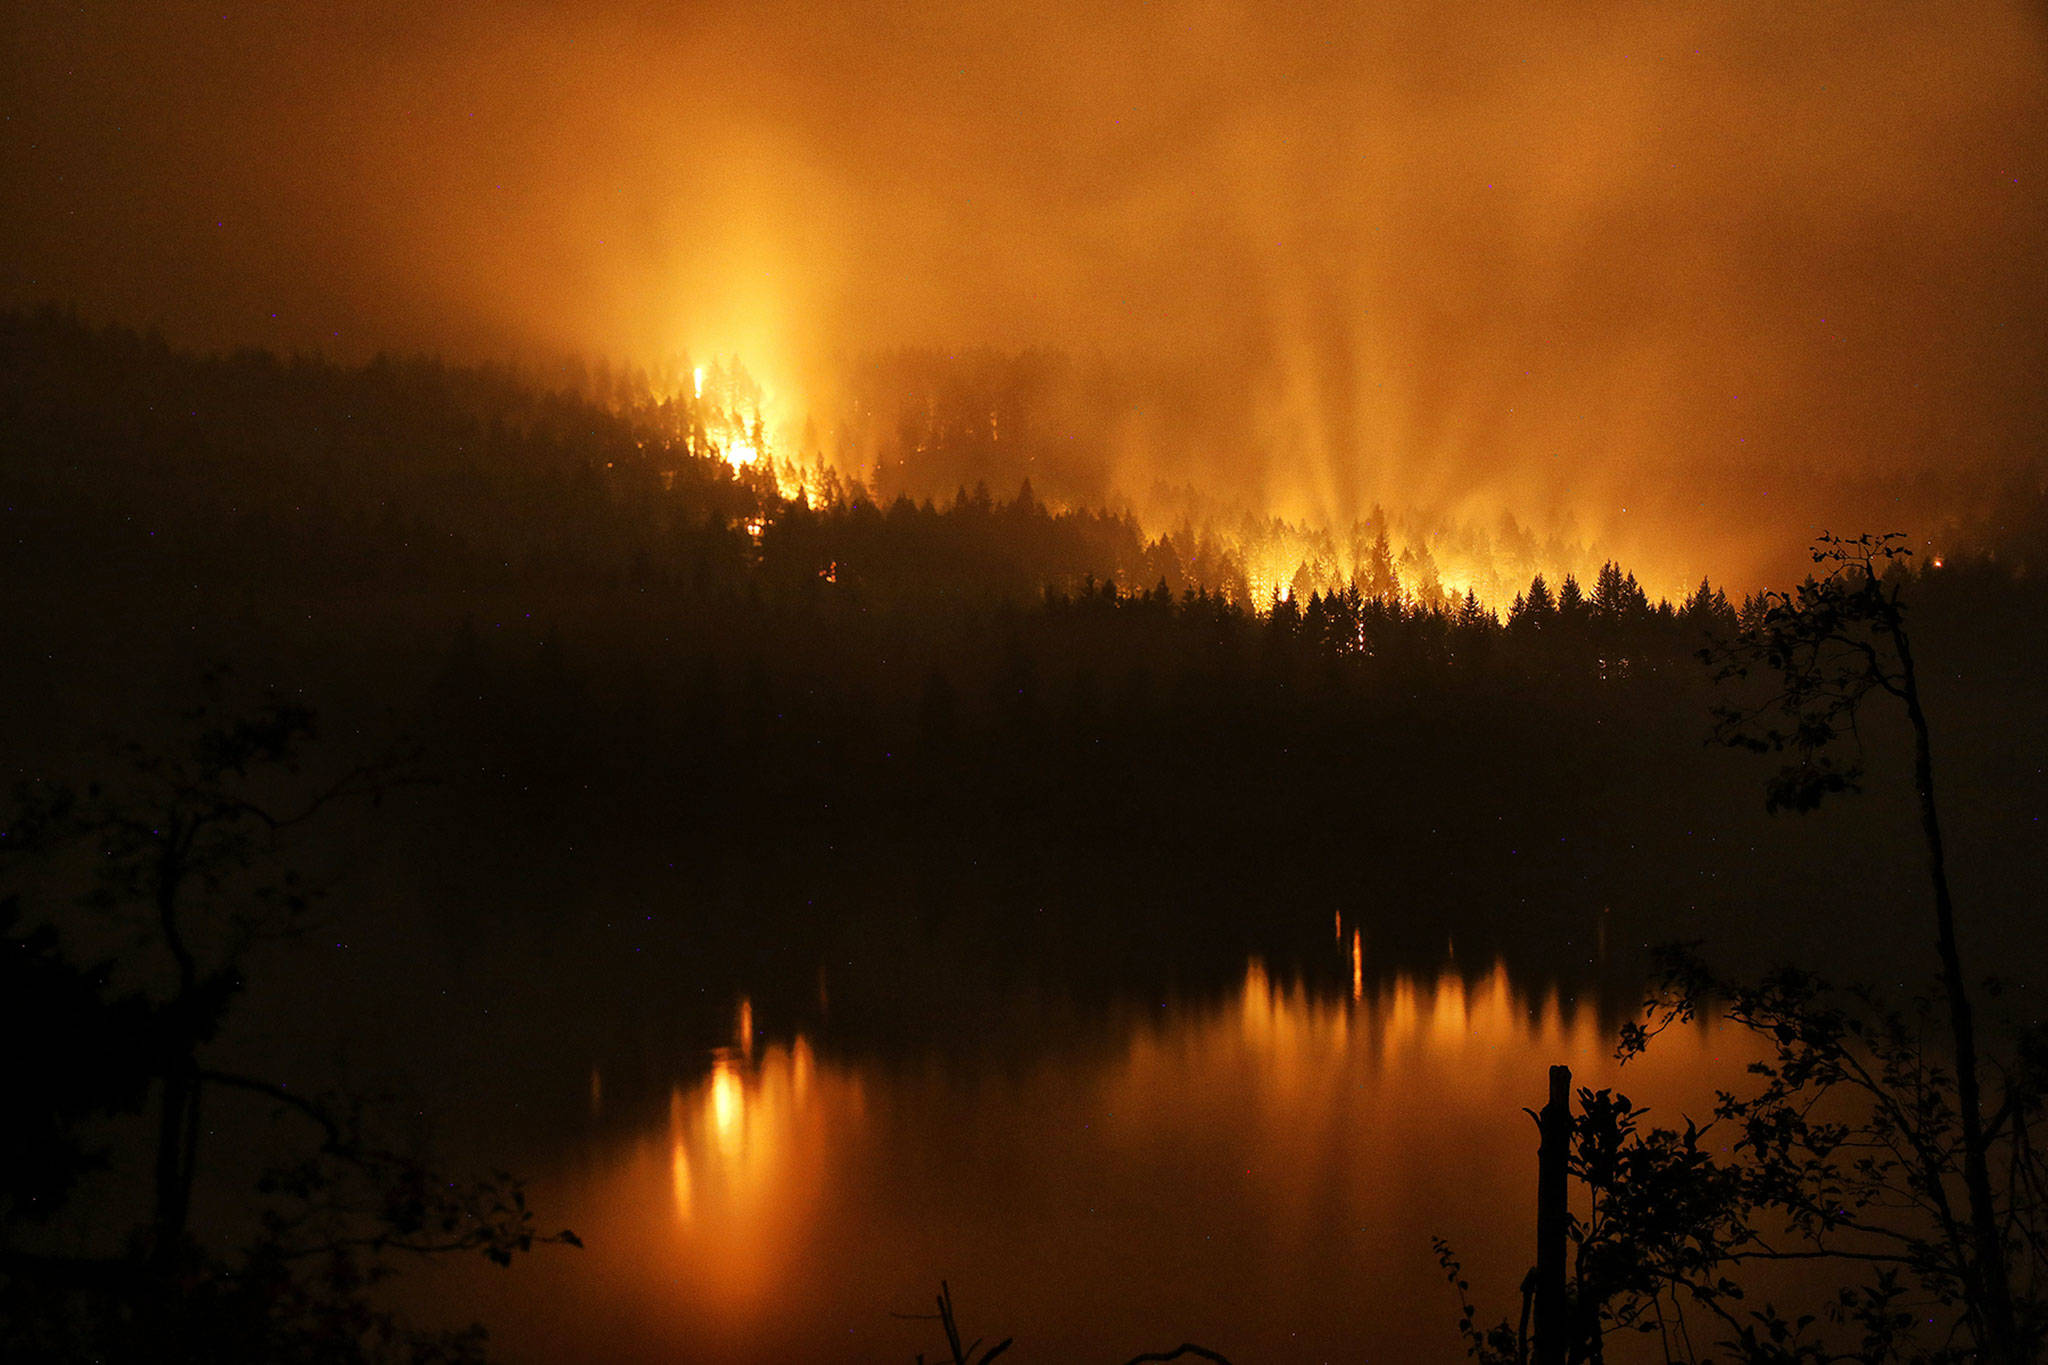 A wildfire burns on the Oregon side of the Columbia River Gorge near Cascade Locks, Oregon, and the Bridge of the Gods late Tuesday. (Genna Martin/seattlepi.com via AP)